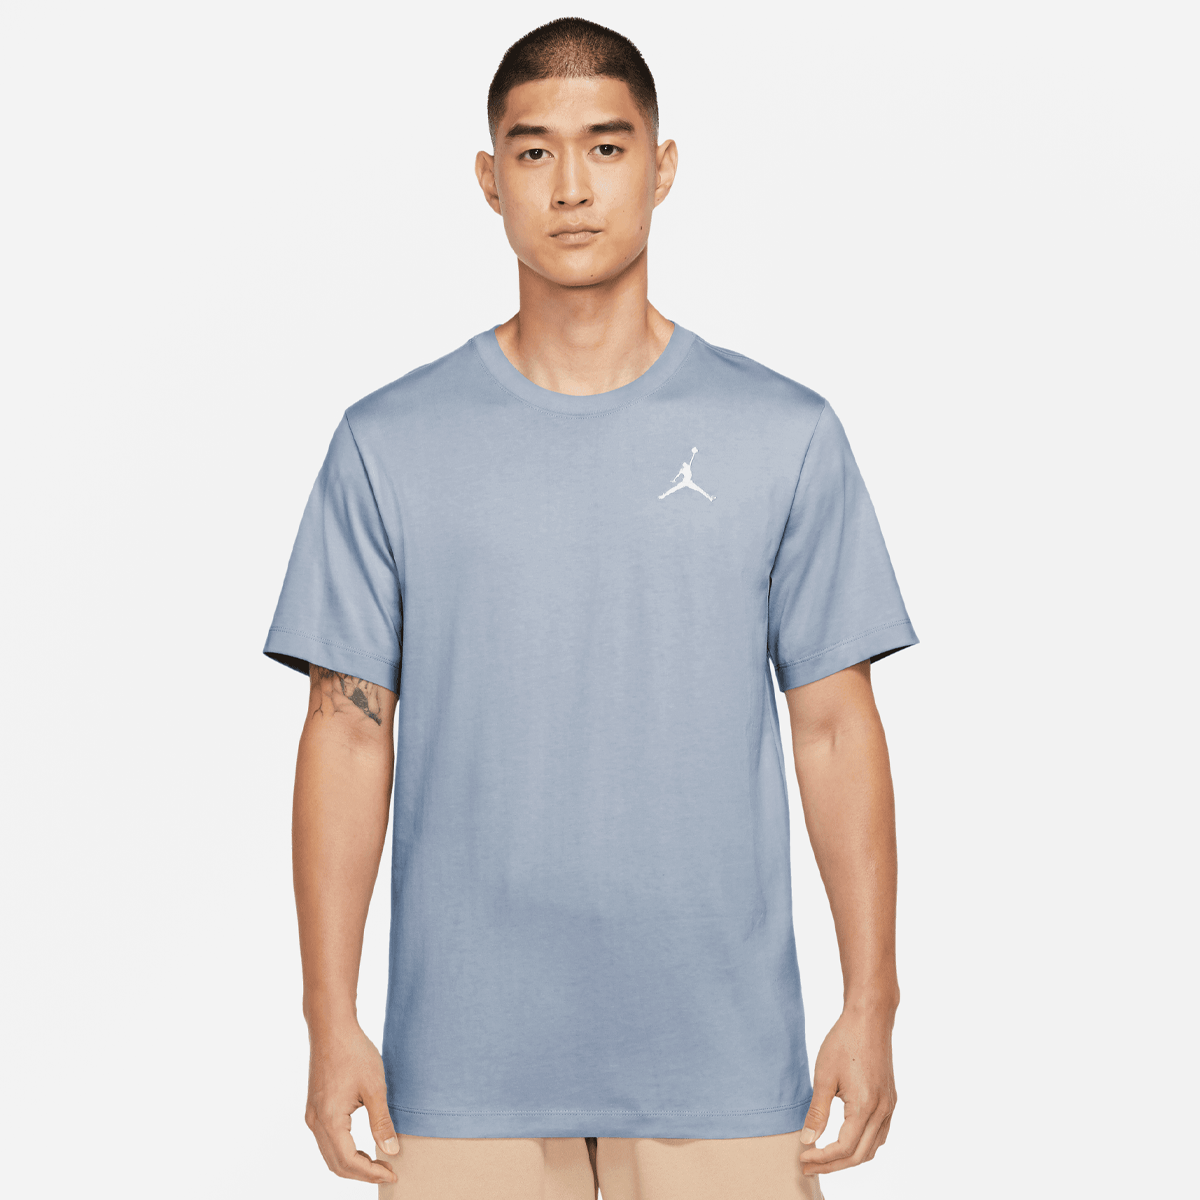 Jumpman Shortsleeve Crew Shirt, JORDAN, Apparel, blue grey/white, taille: S